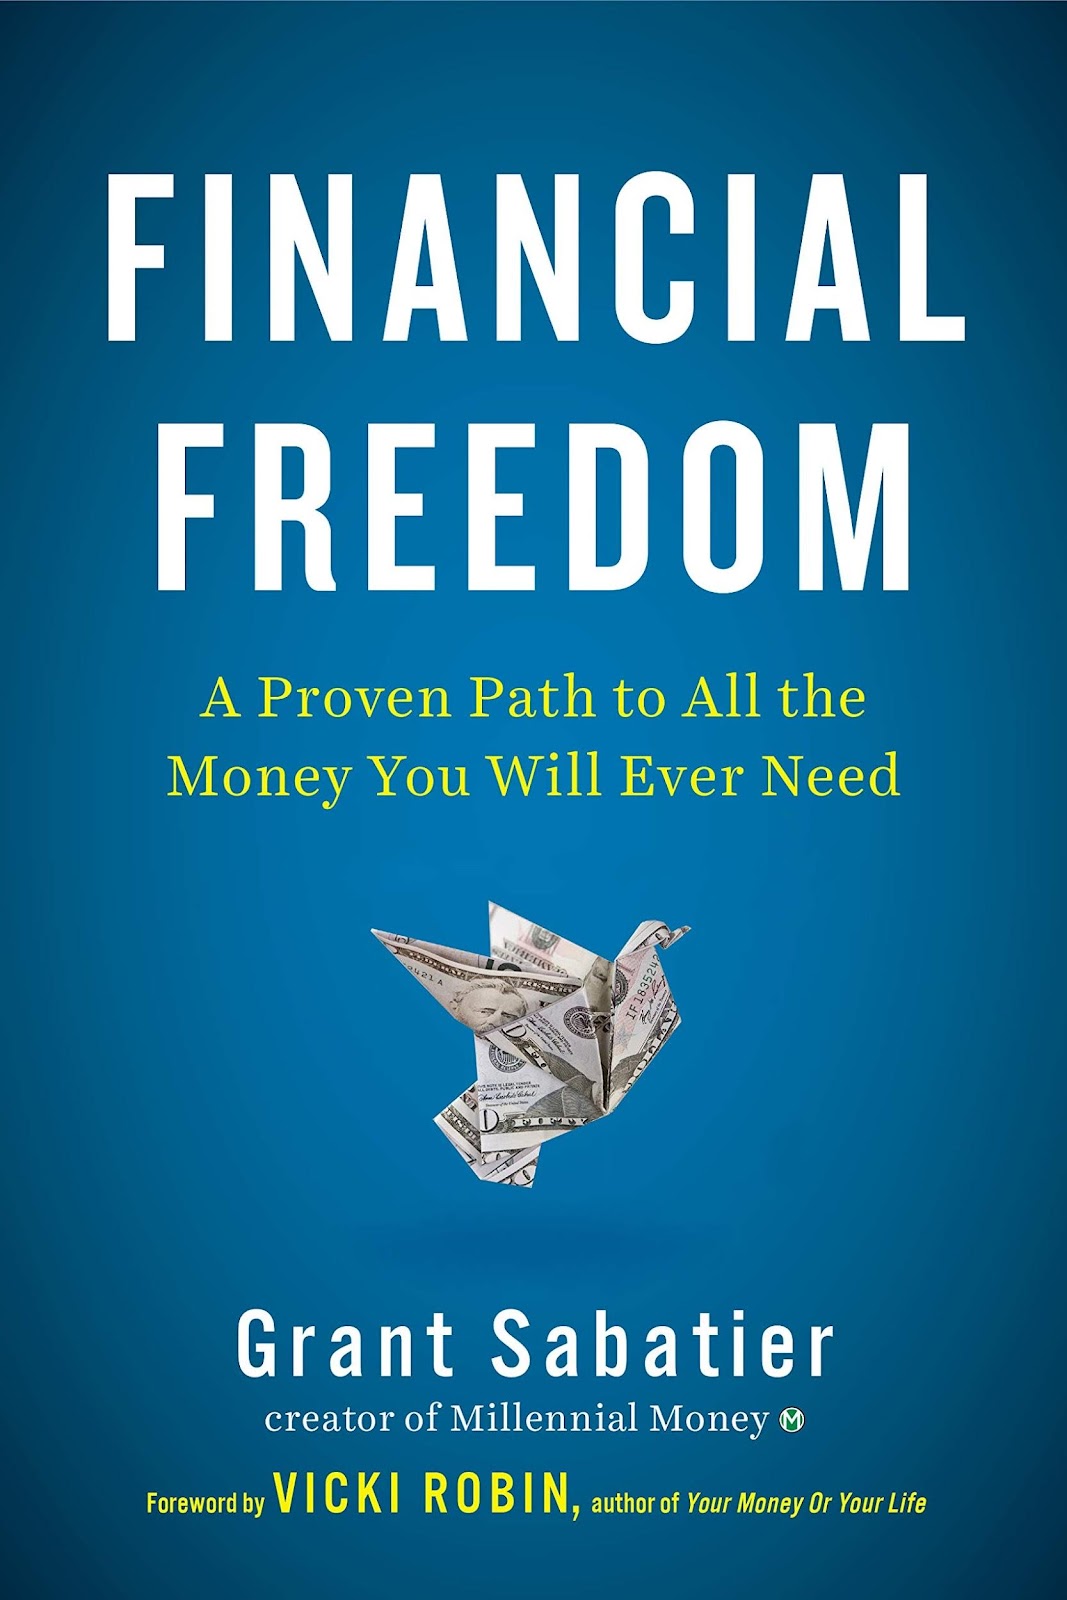 Livro 'Financial Freedom'